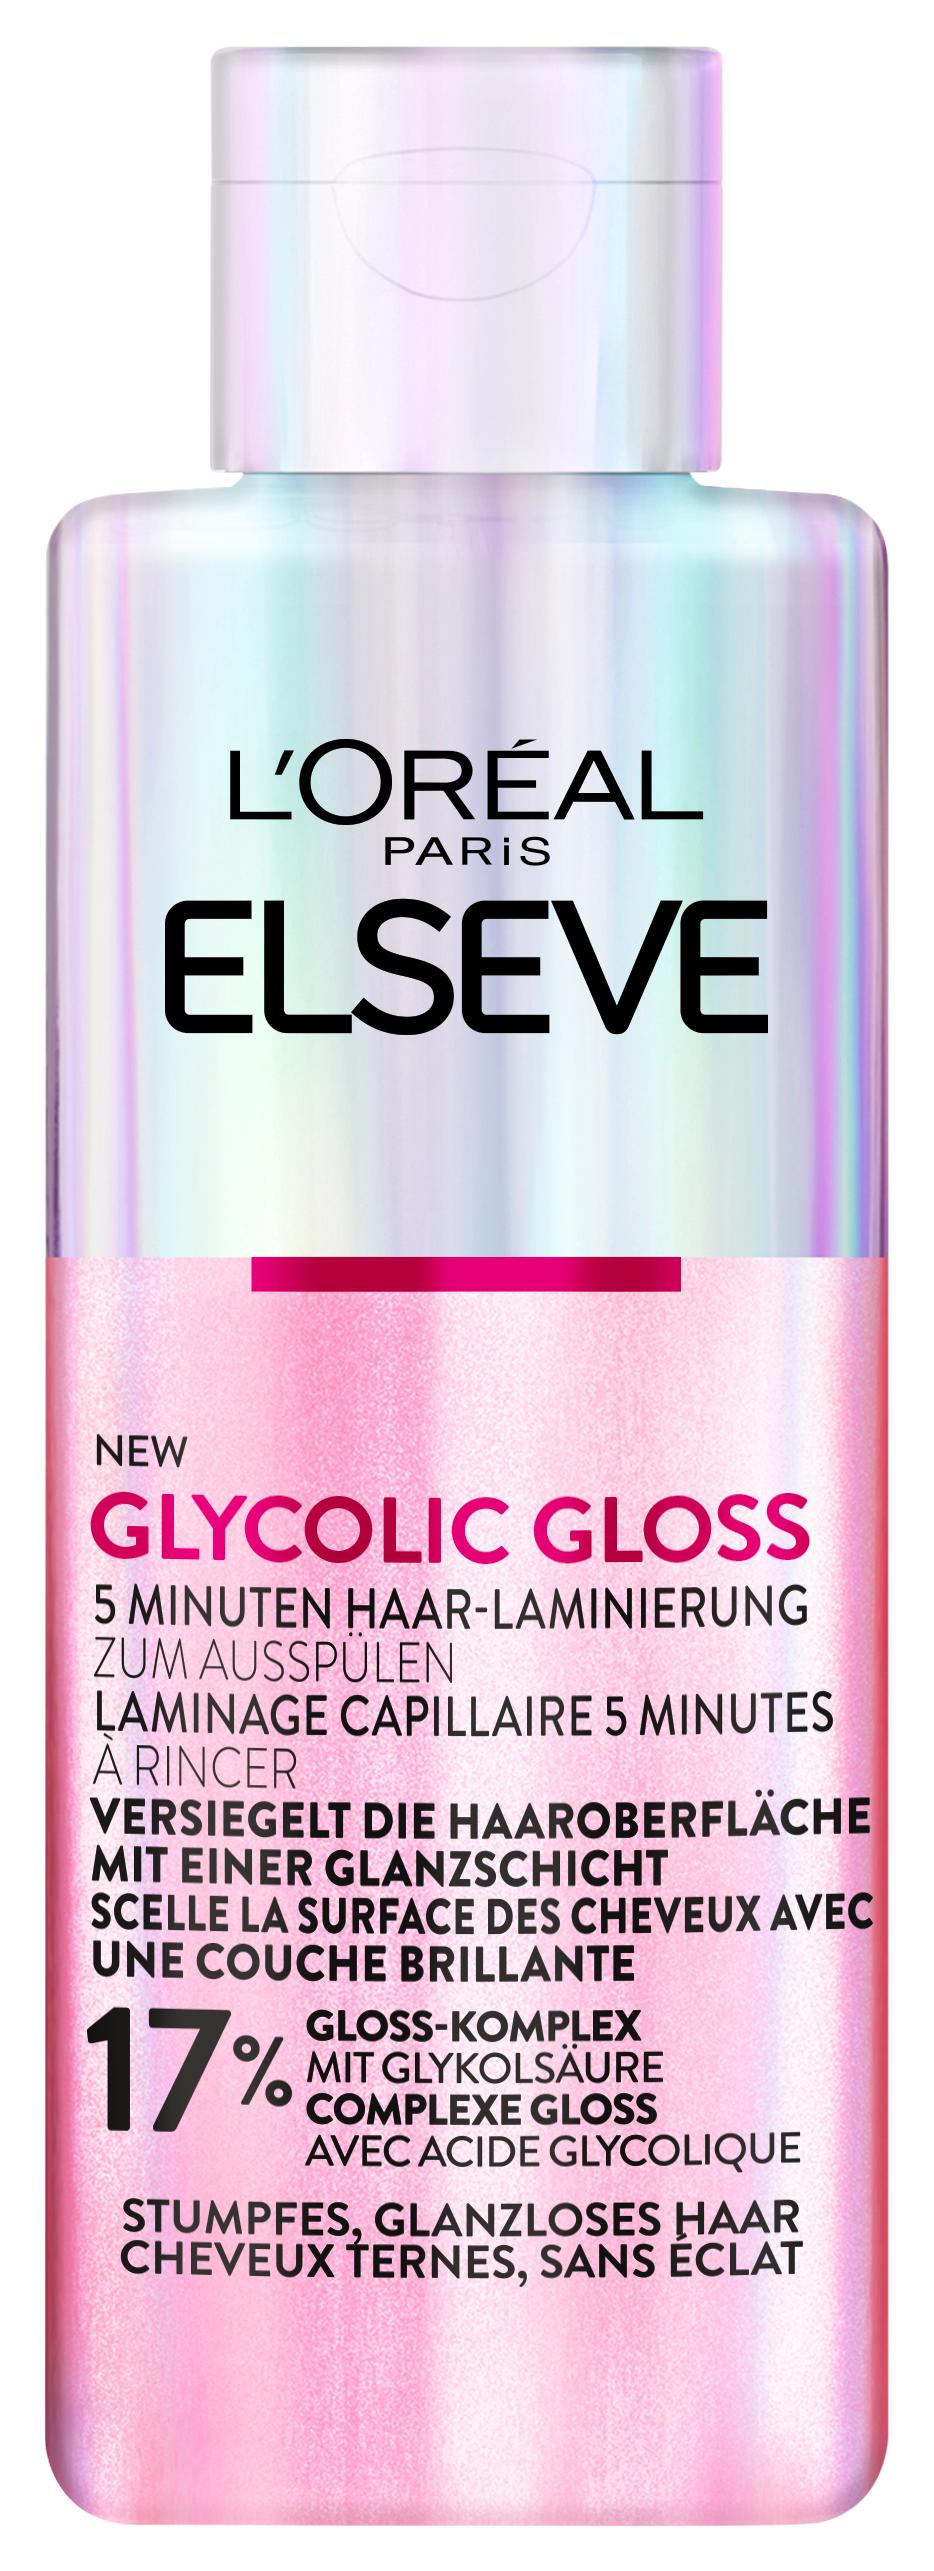 LOréal Elseve Haircare - Glycolic Gloss 5 Minuten Haar-Laminierung